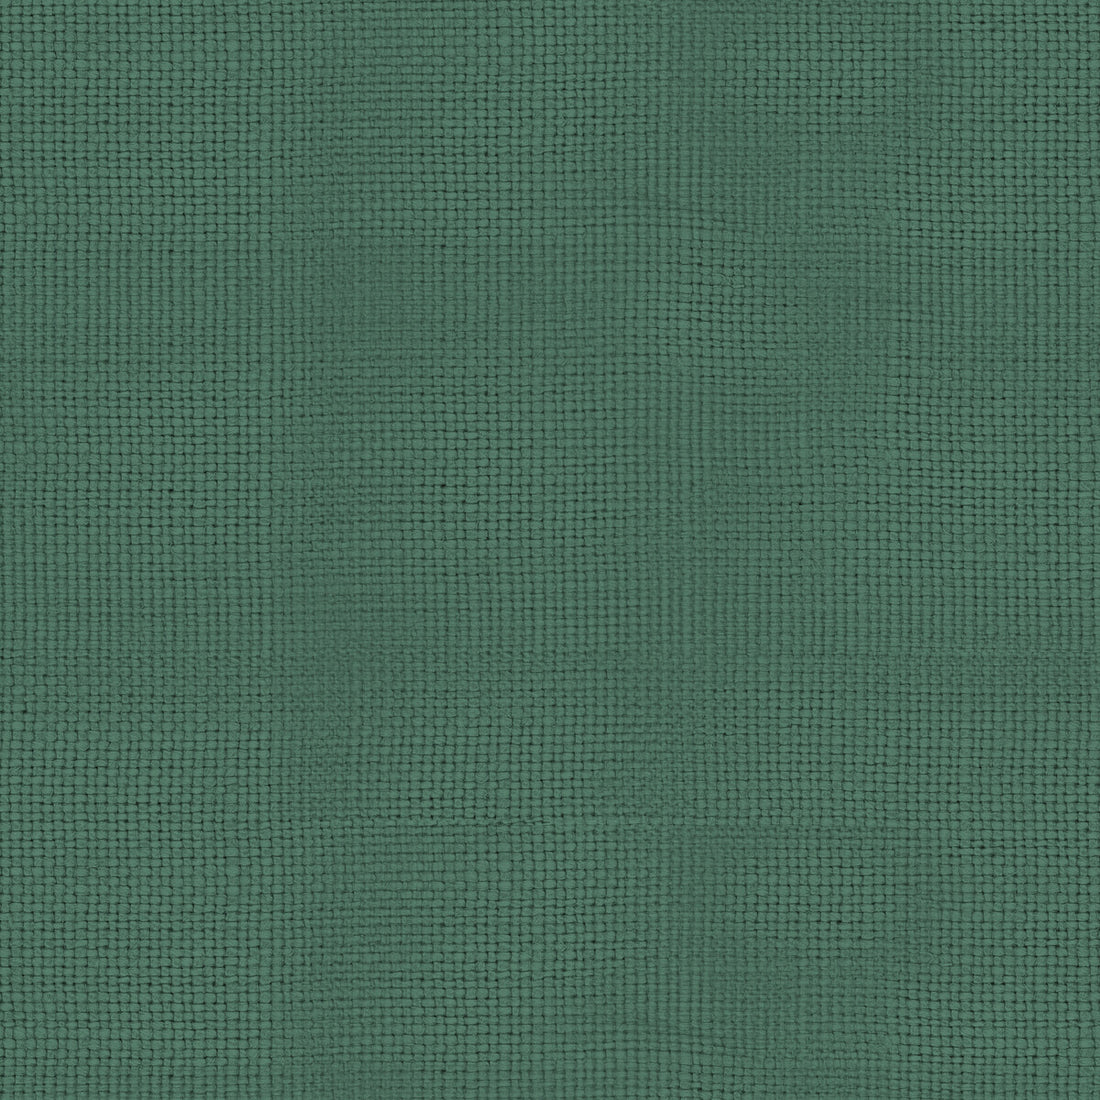 Kravet Design fabric in 32330-23 color - pattern 32330.23.0 - by Kravet Design in the Gis collection